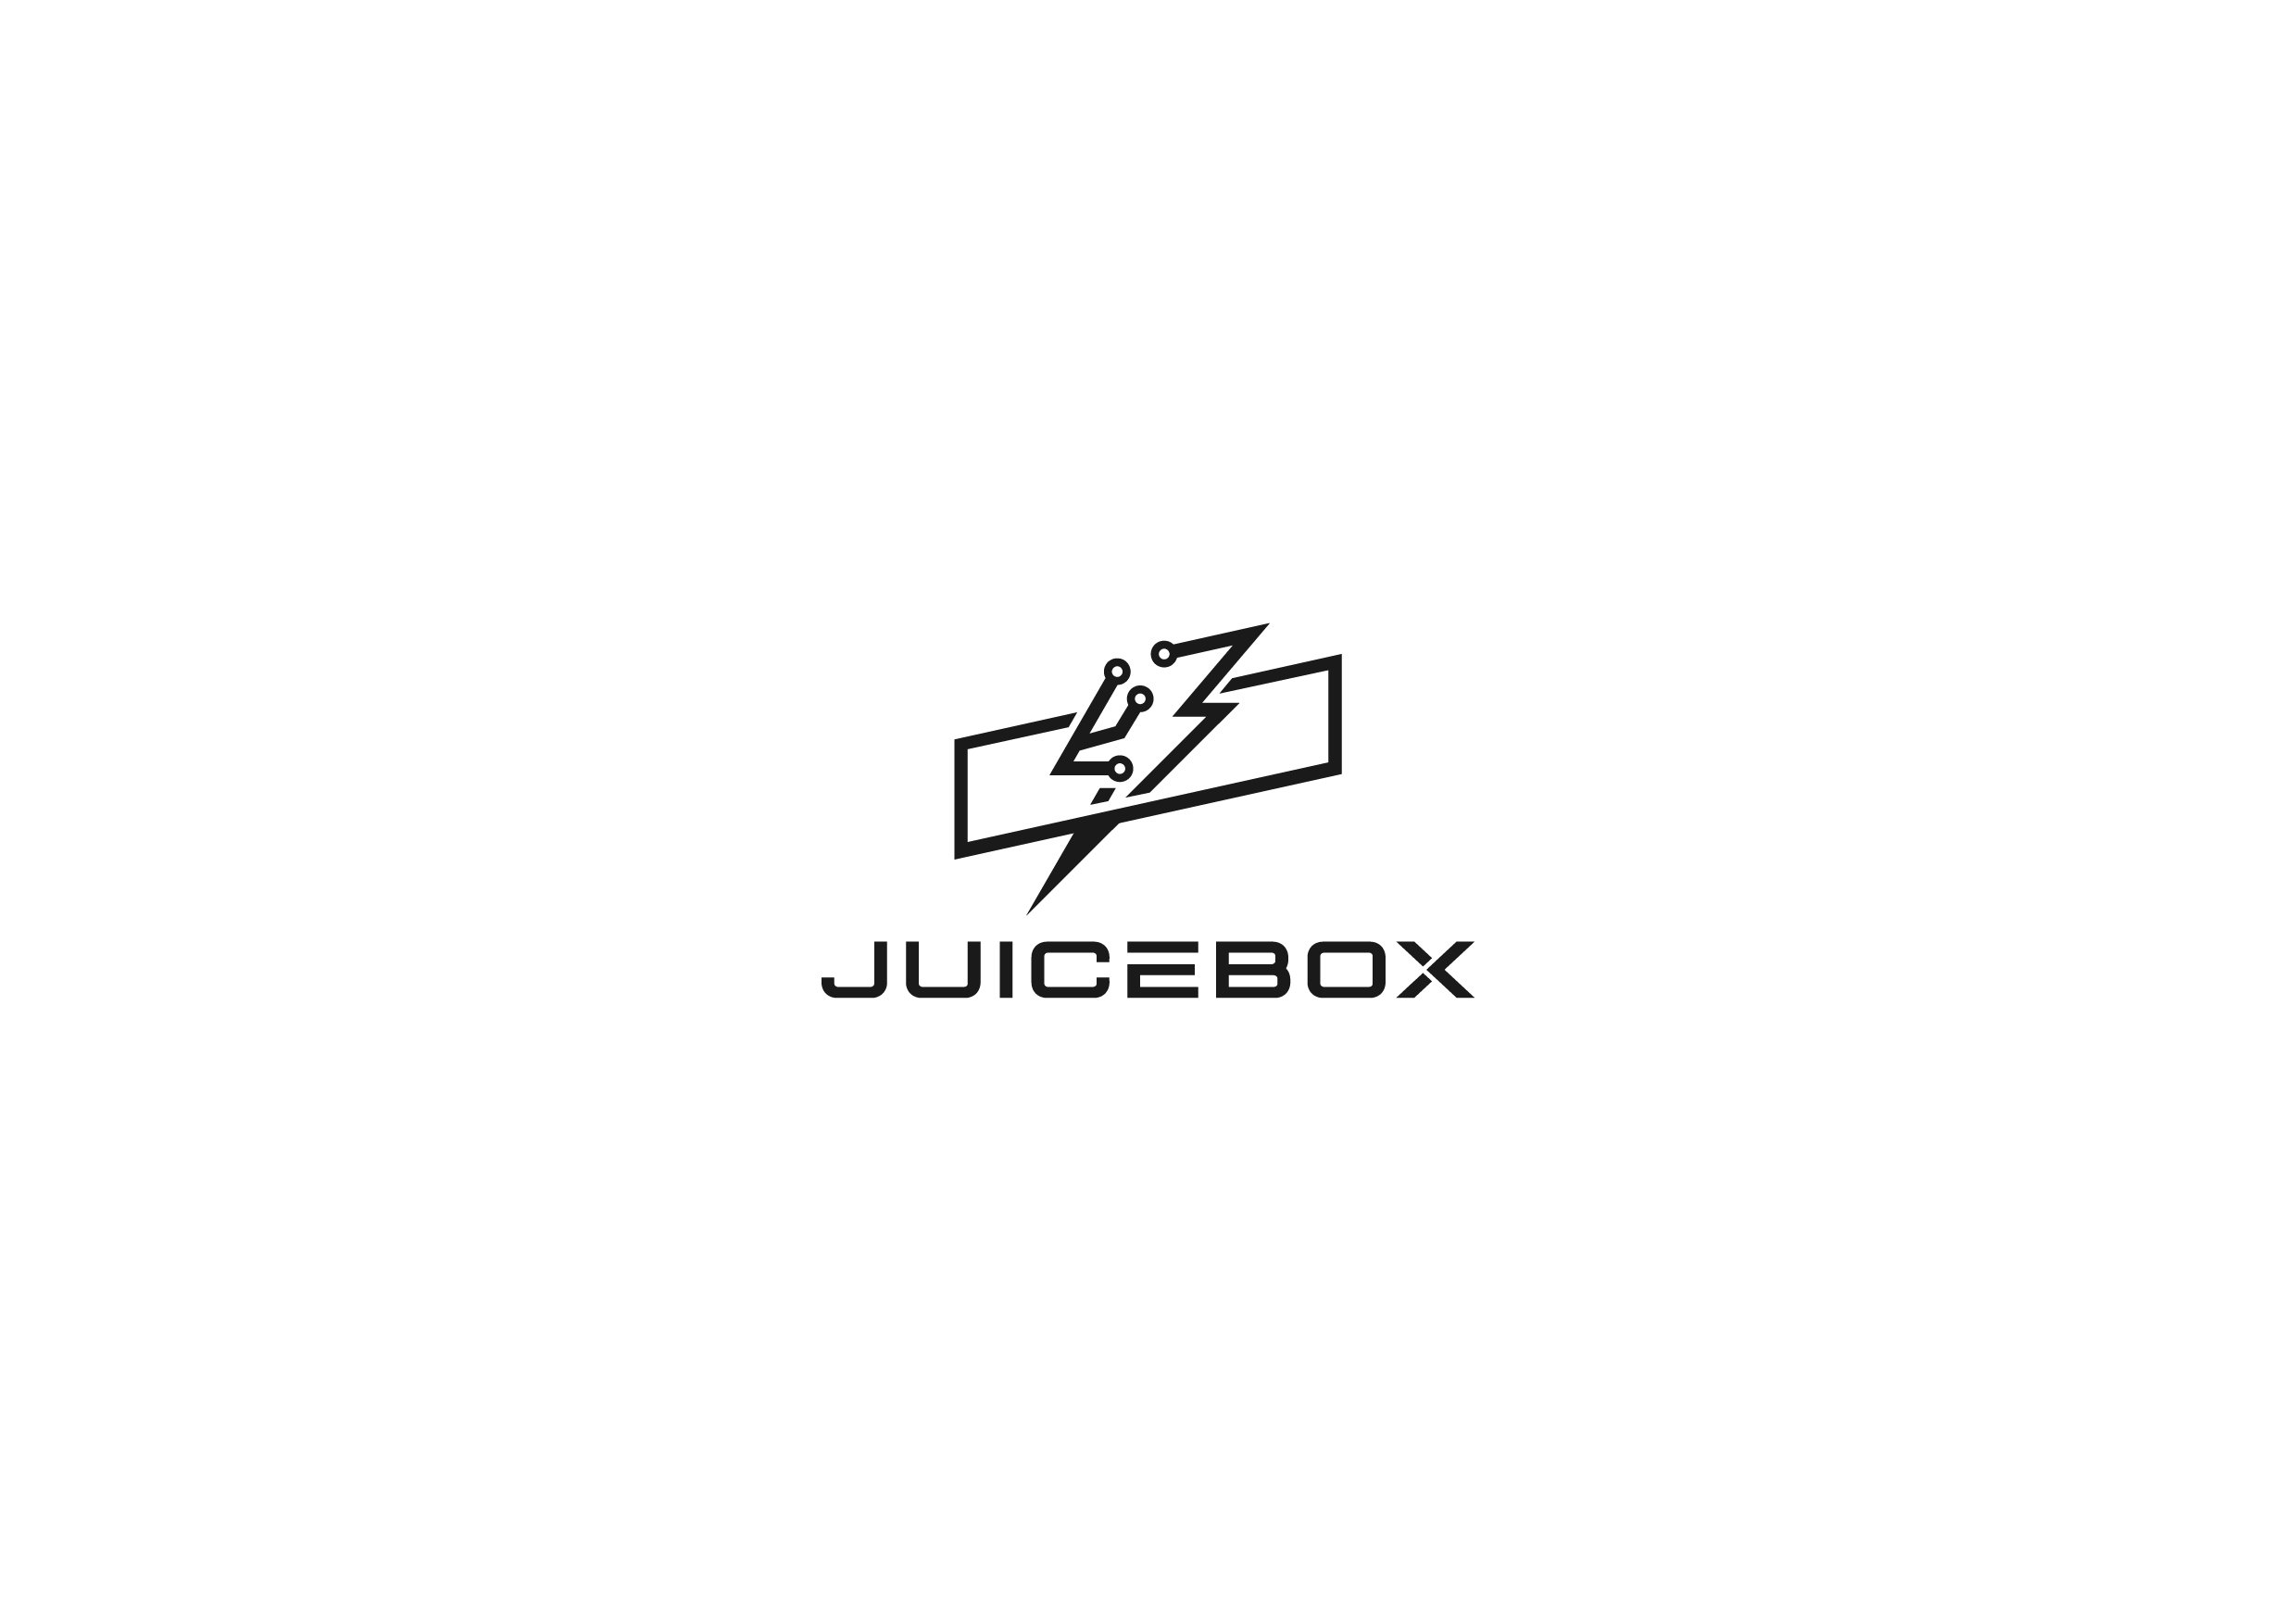 JUICEBOX